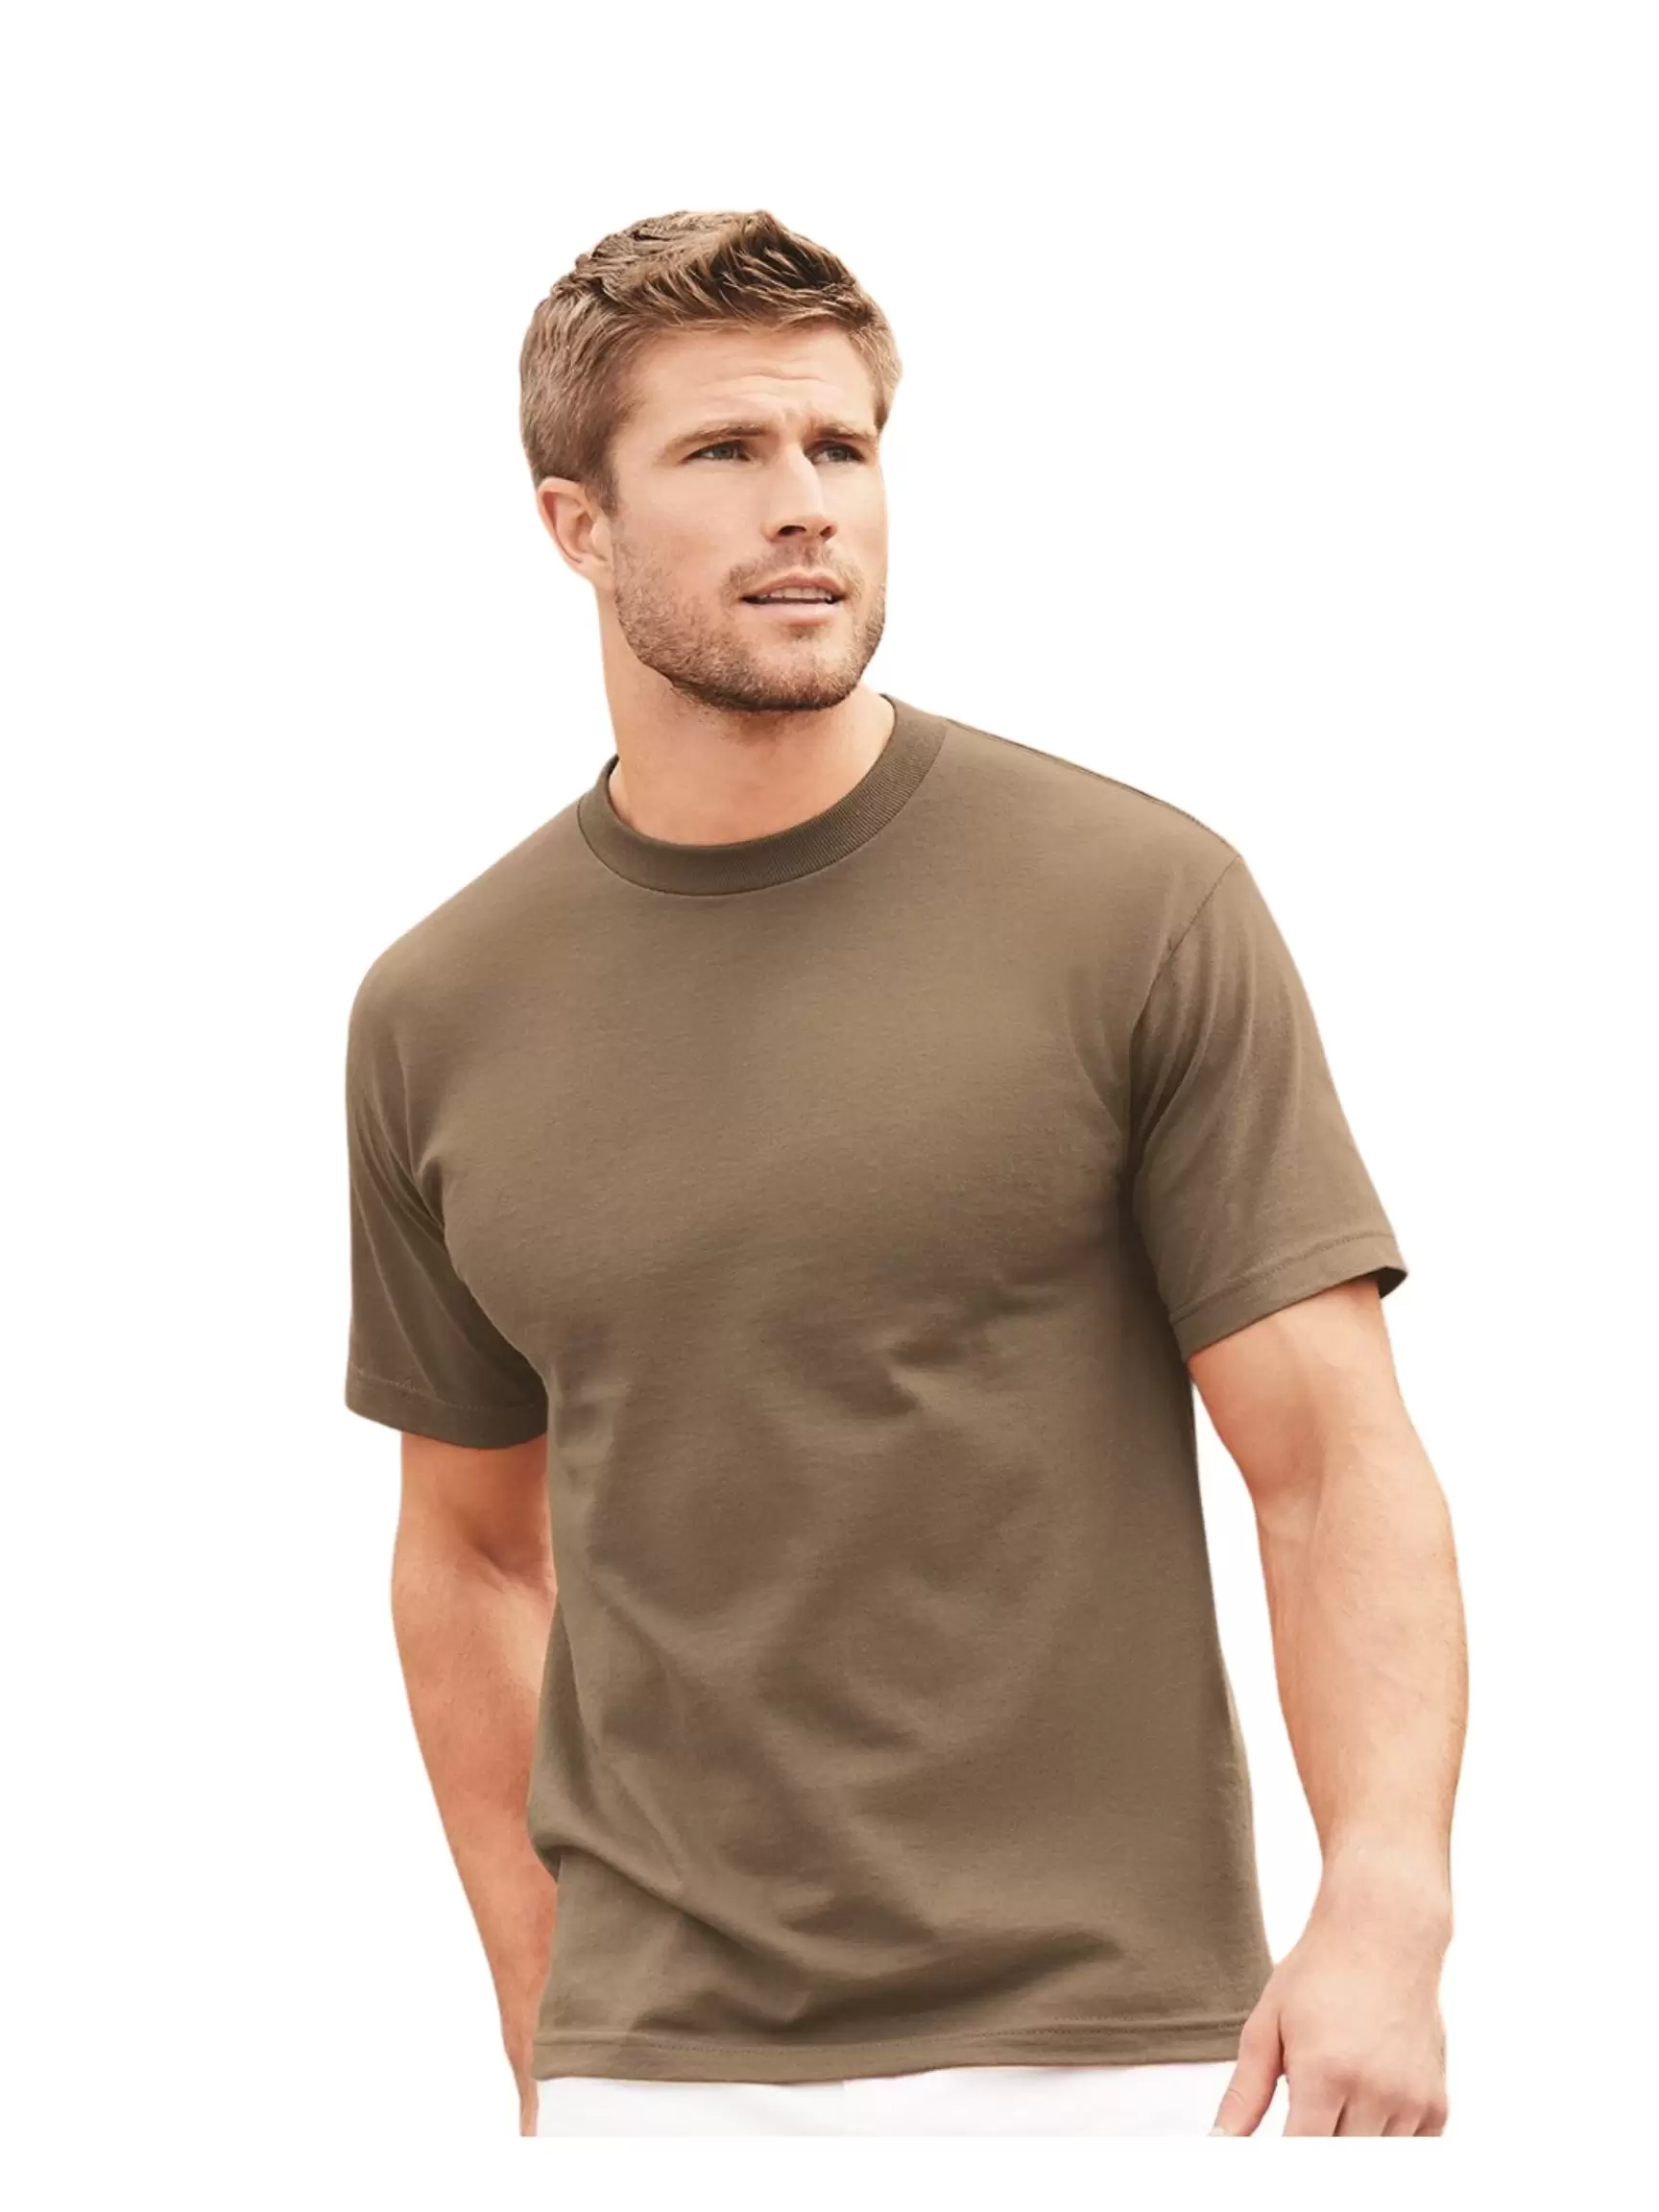 American Apparel 1301 Unisex Heavyweight Cotton T-Shirt - Sand